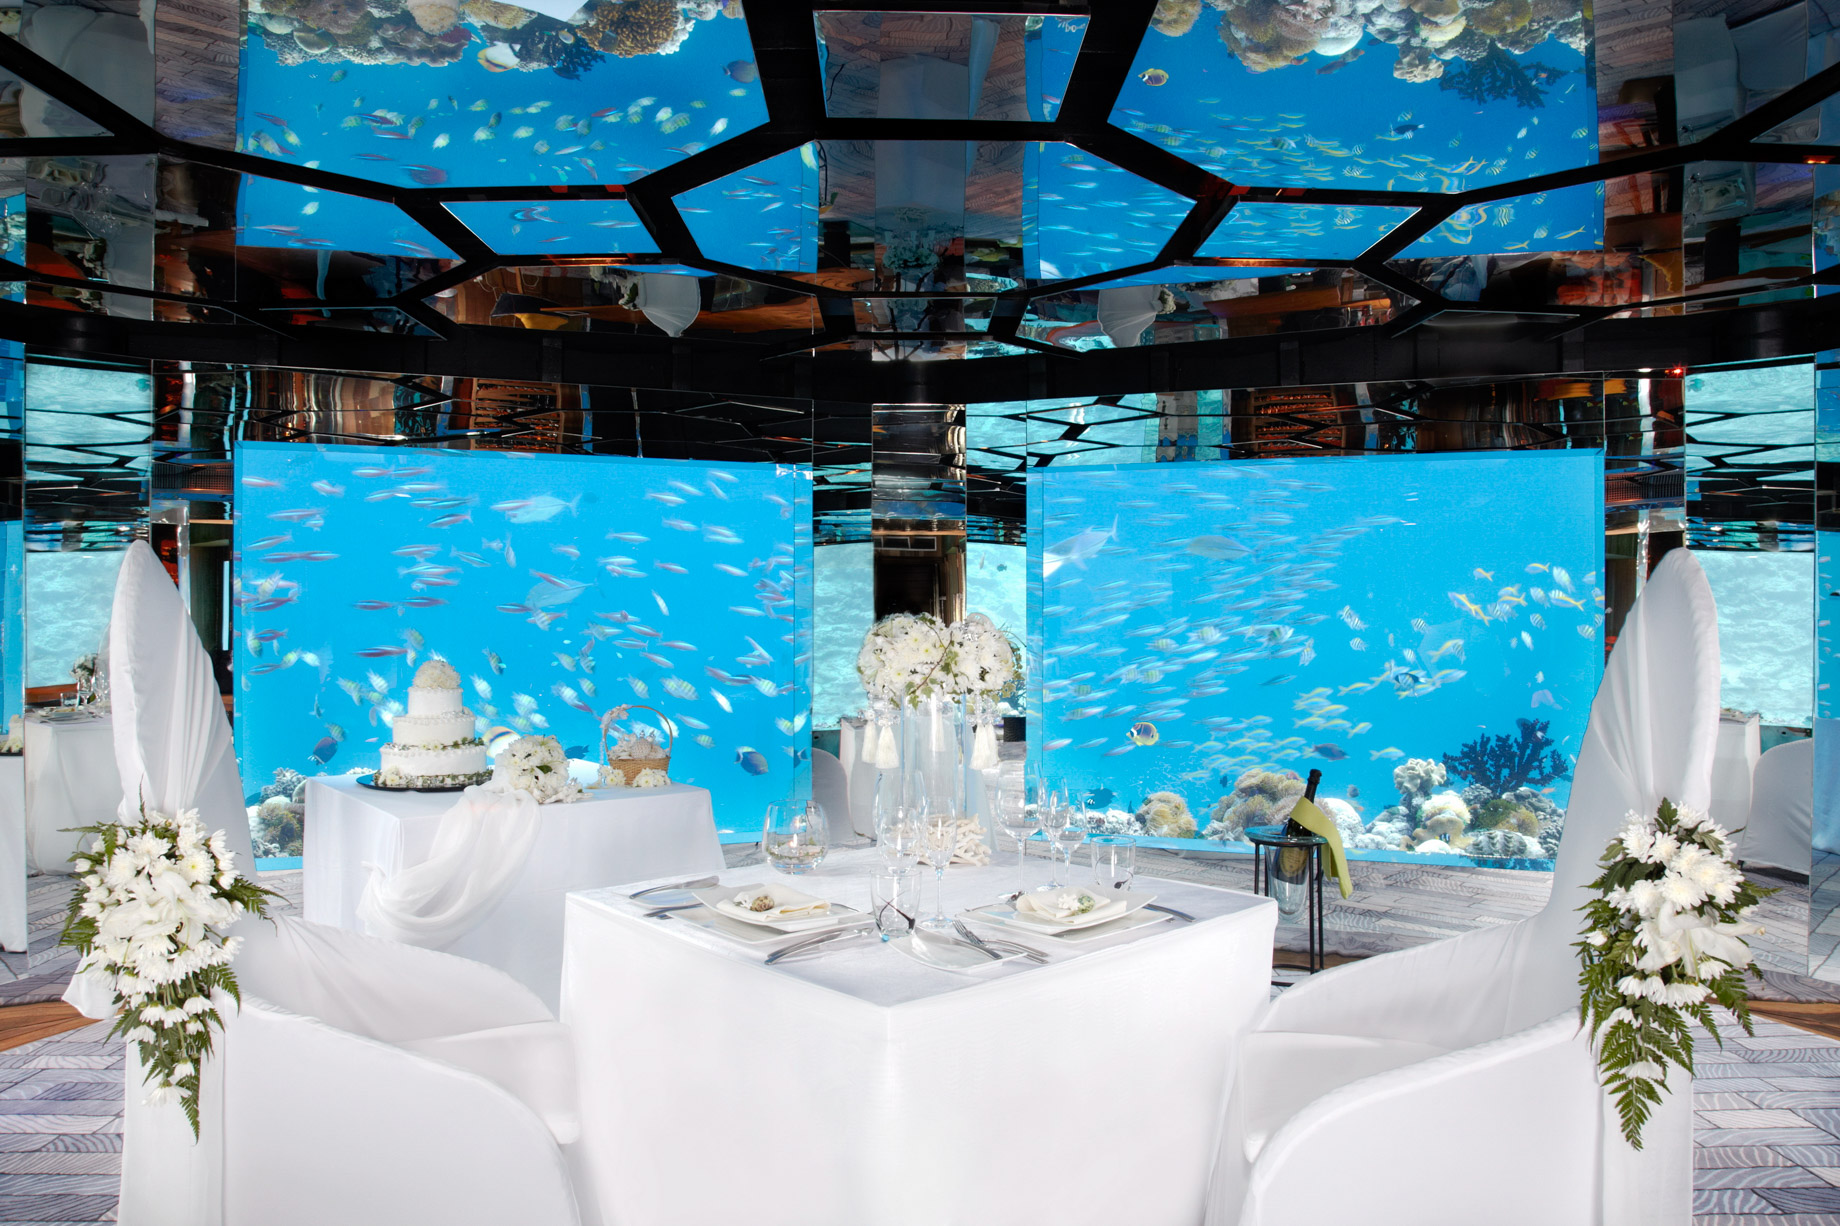 Anantara Kihavah Maldives Villas Resort – Baa Atoll, Maldives – SEA Underwater Restaurant Wedding